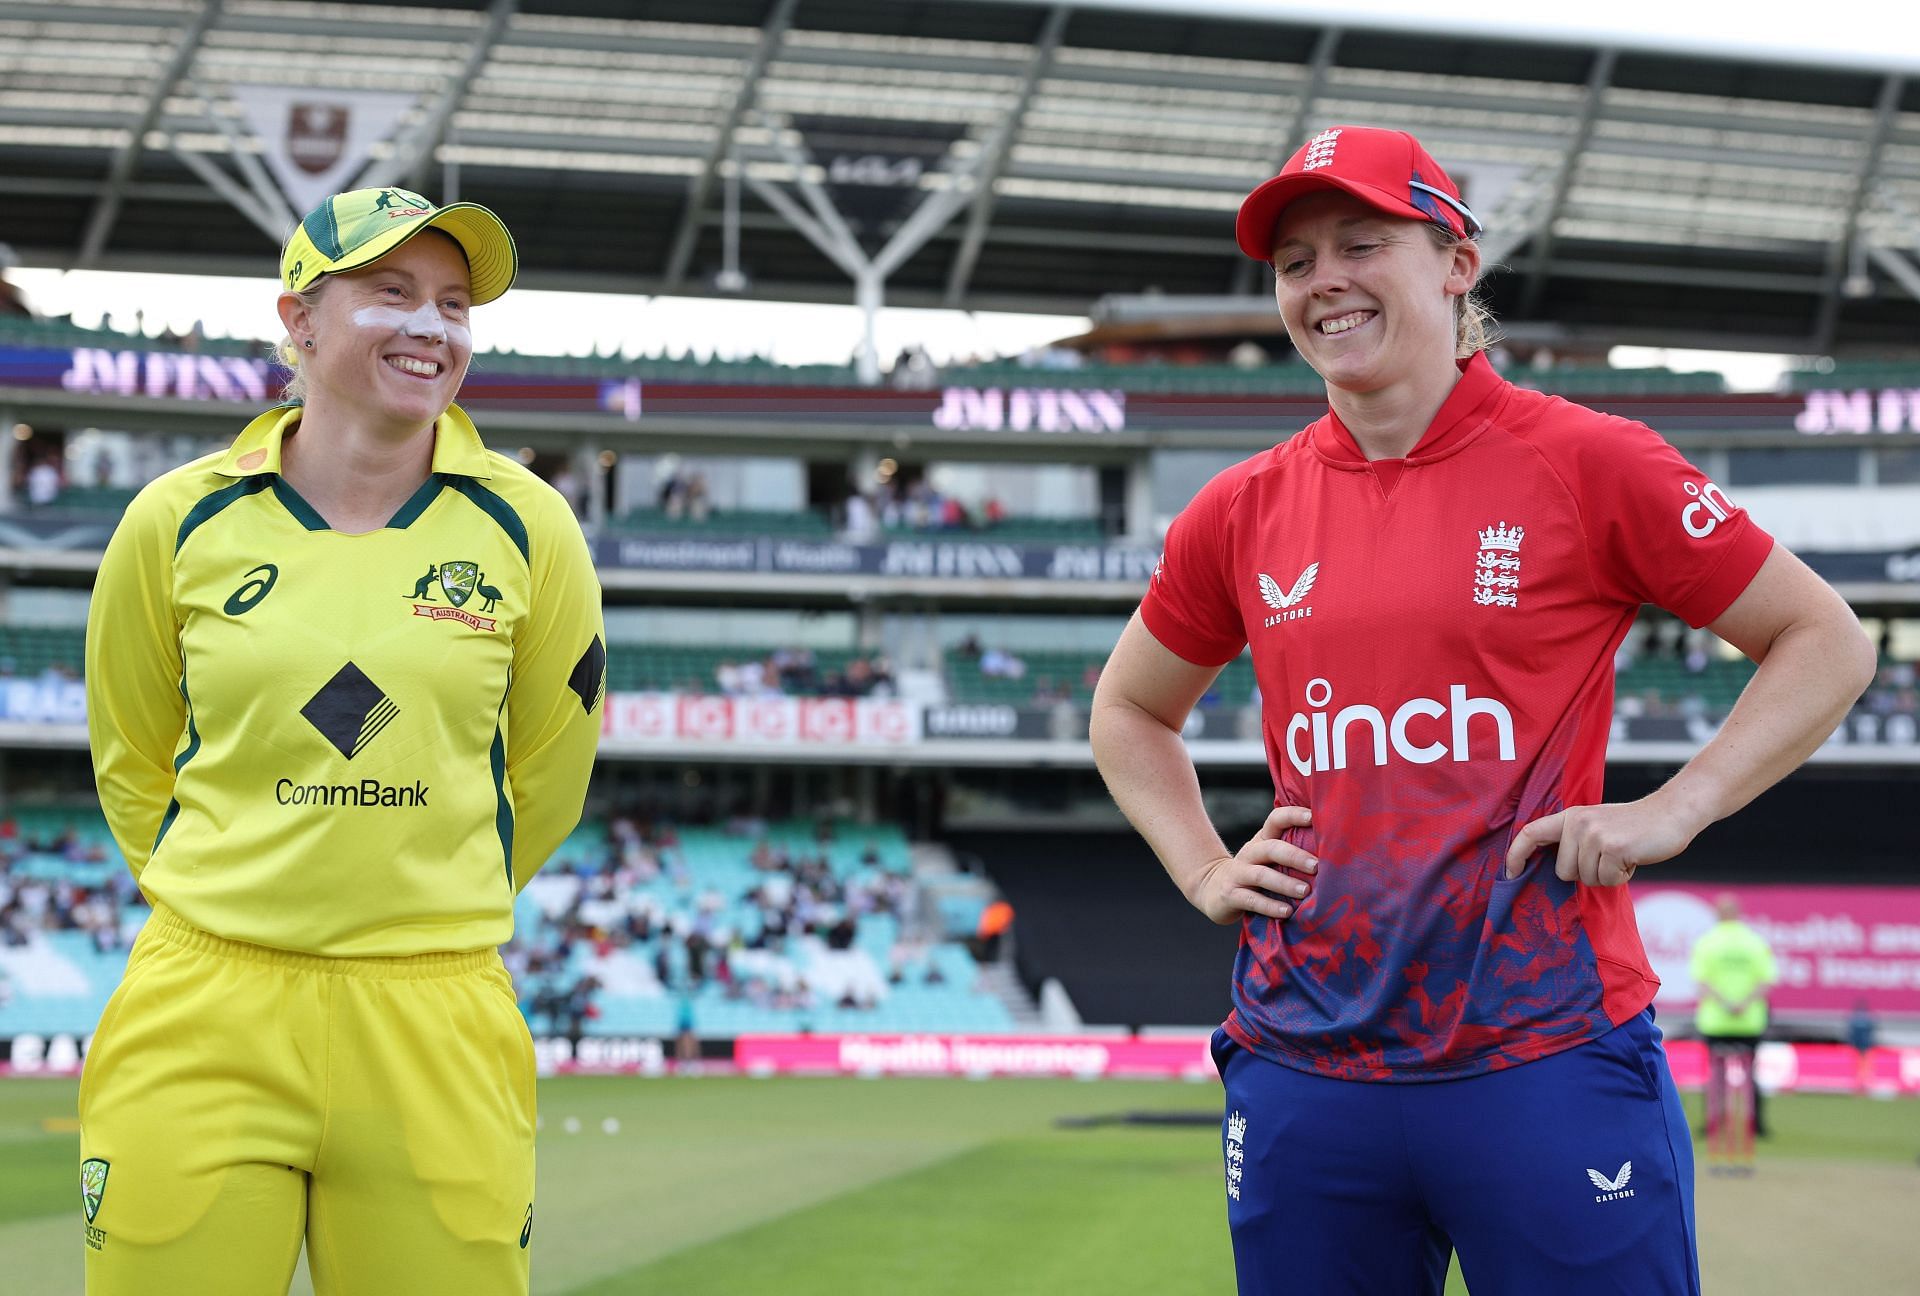 England v Australia - Women